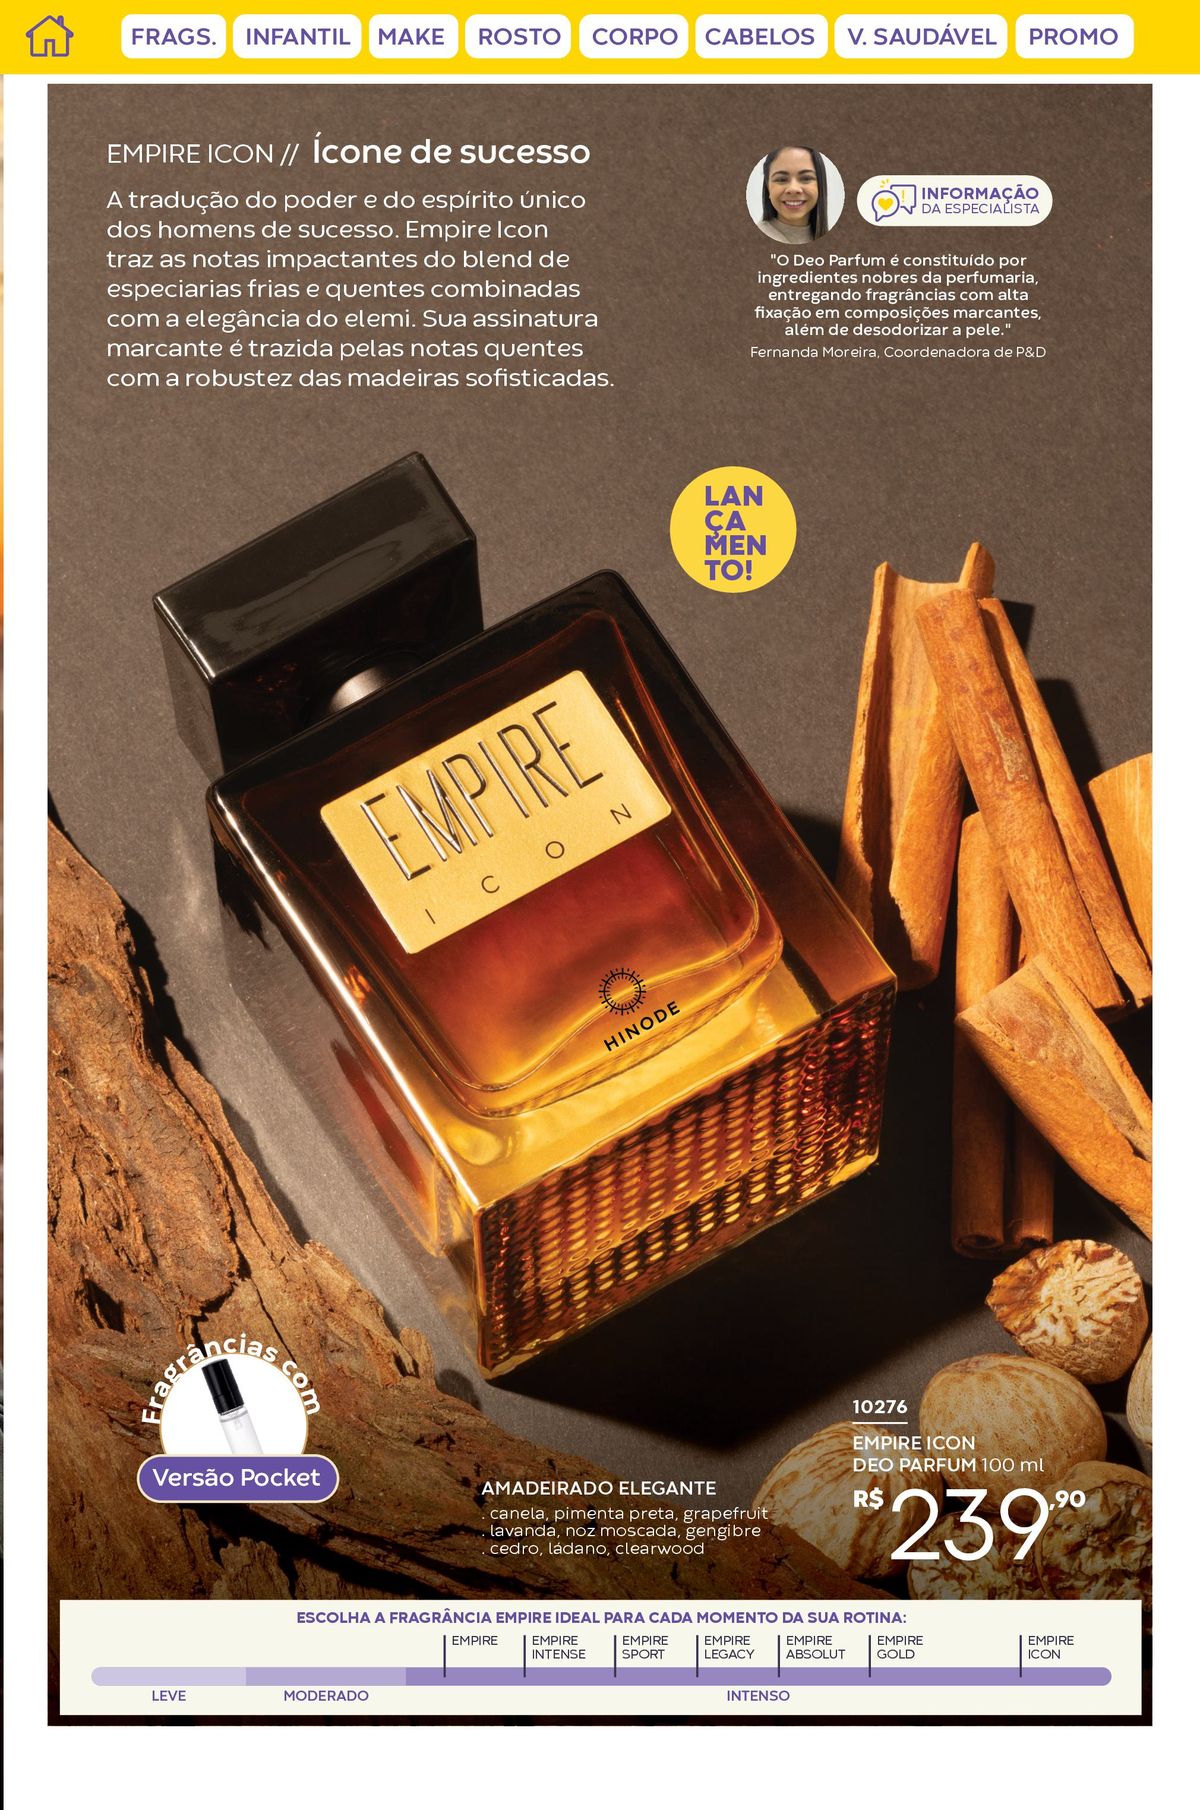 Desconto: Perfume Empire Icon Deo Parfum 100ml por R$90